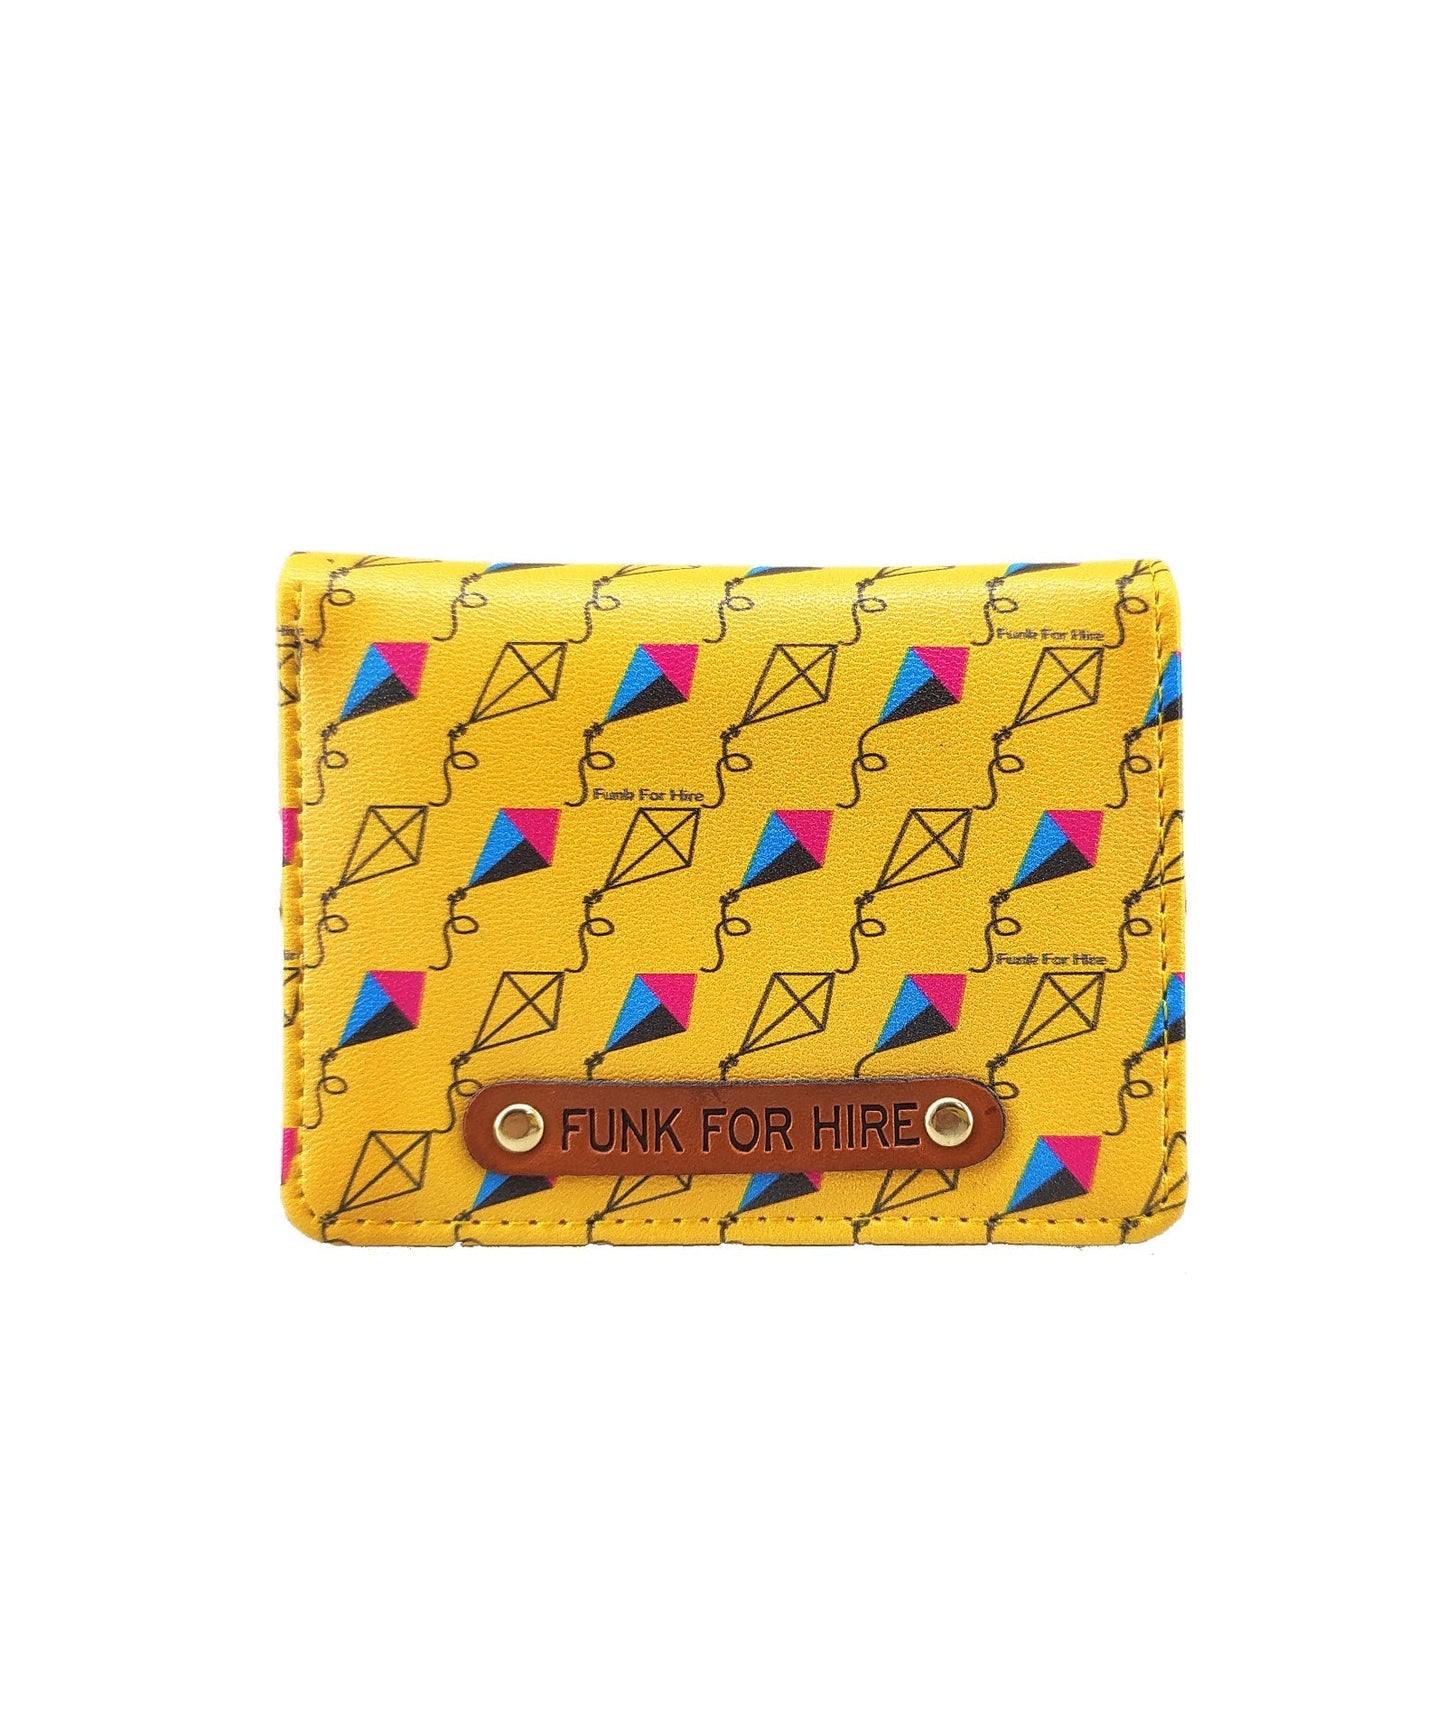 Garage Sale : Kite Pocket Yellow Wallet -58